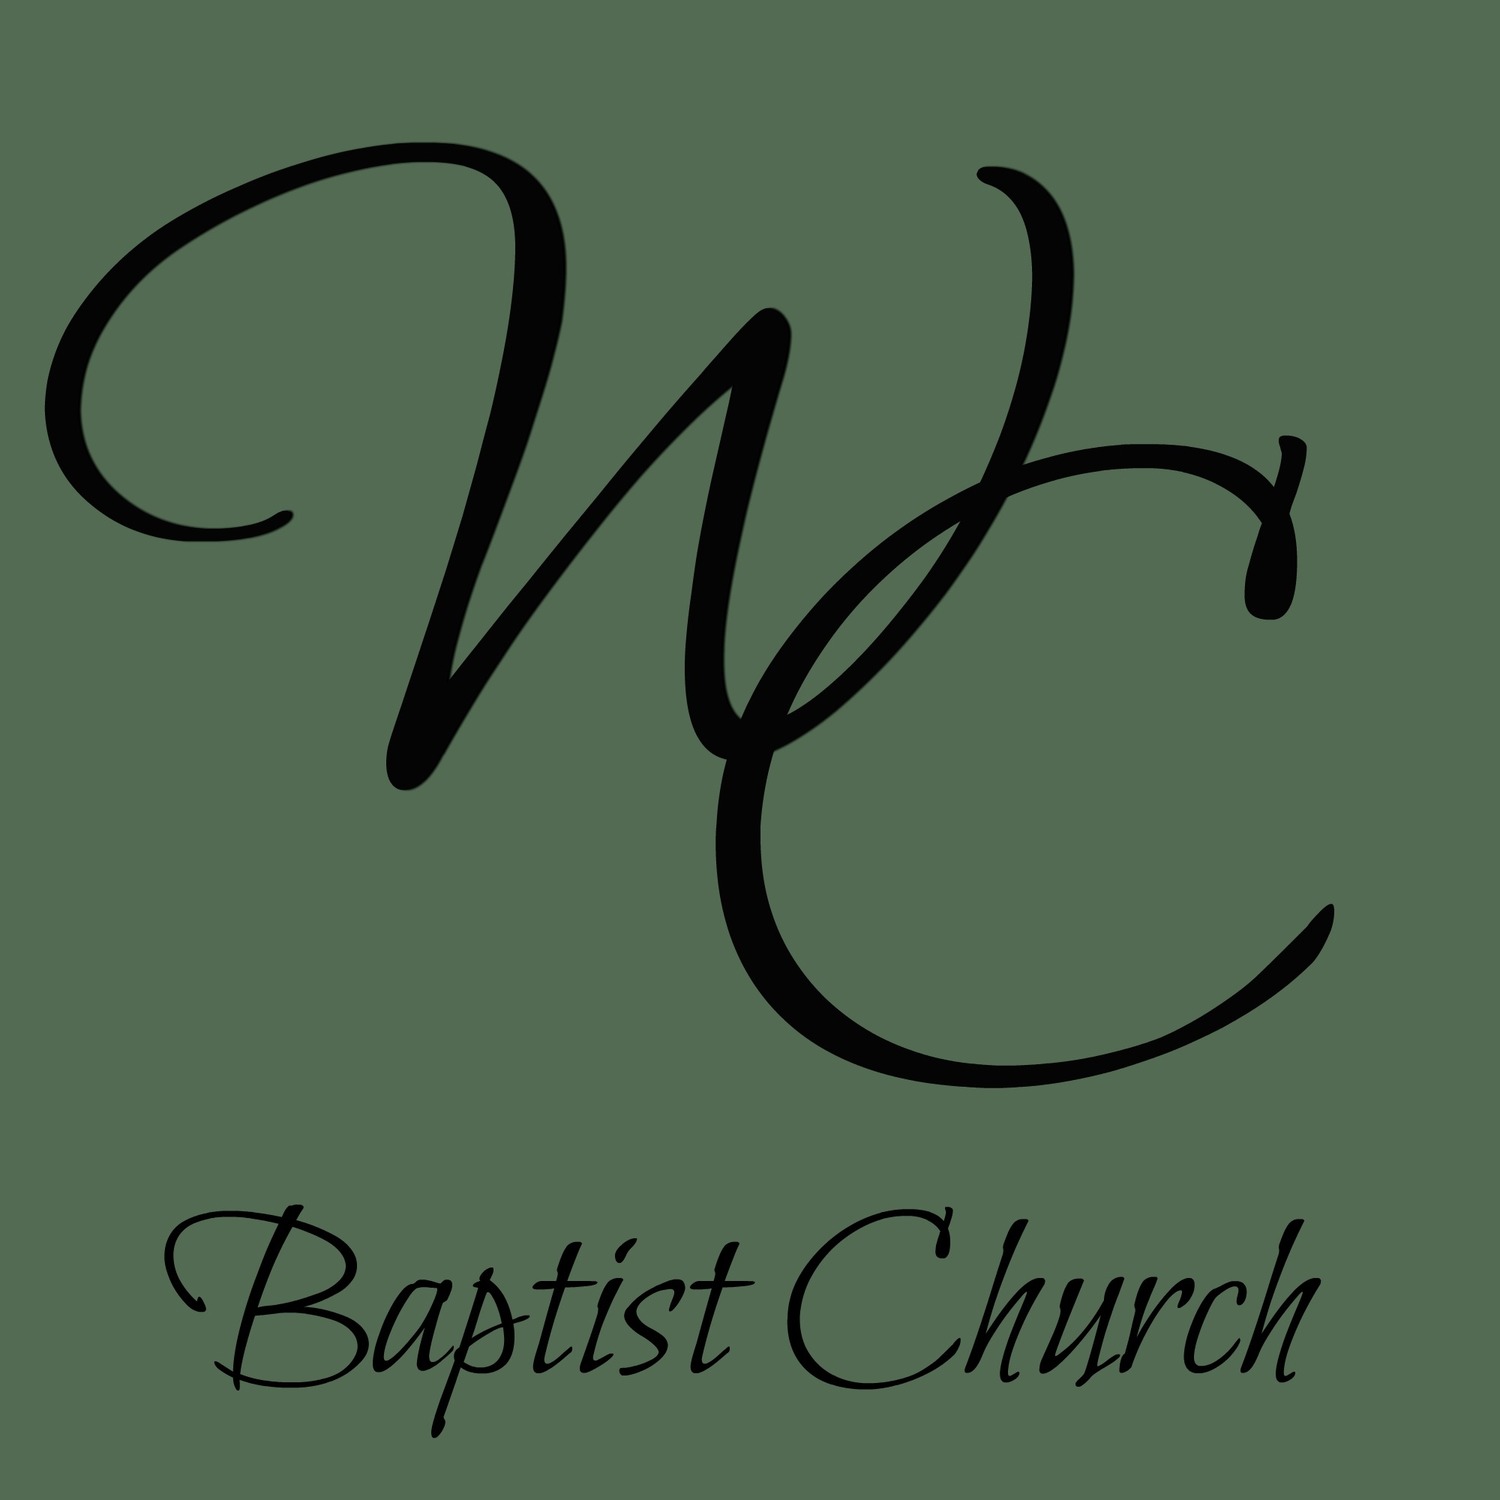 West Craig Road Baptist Church